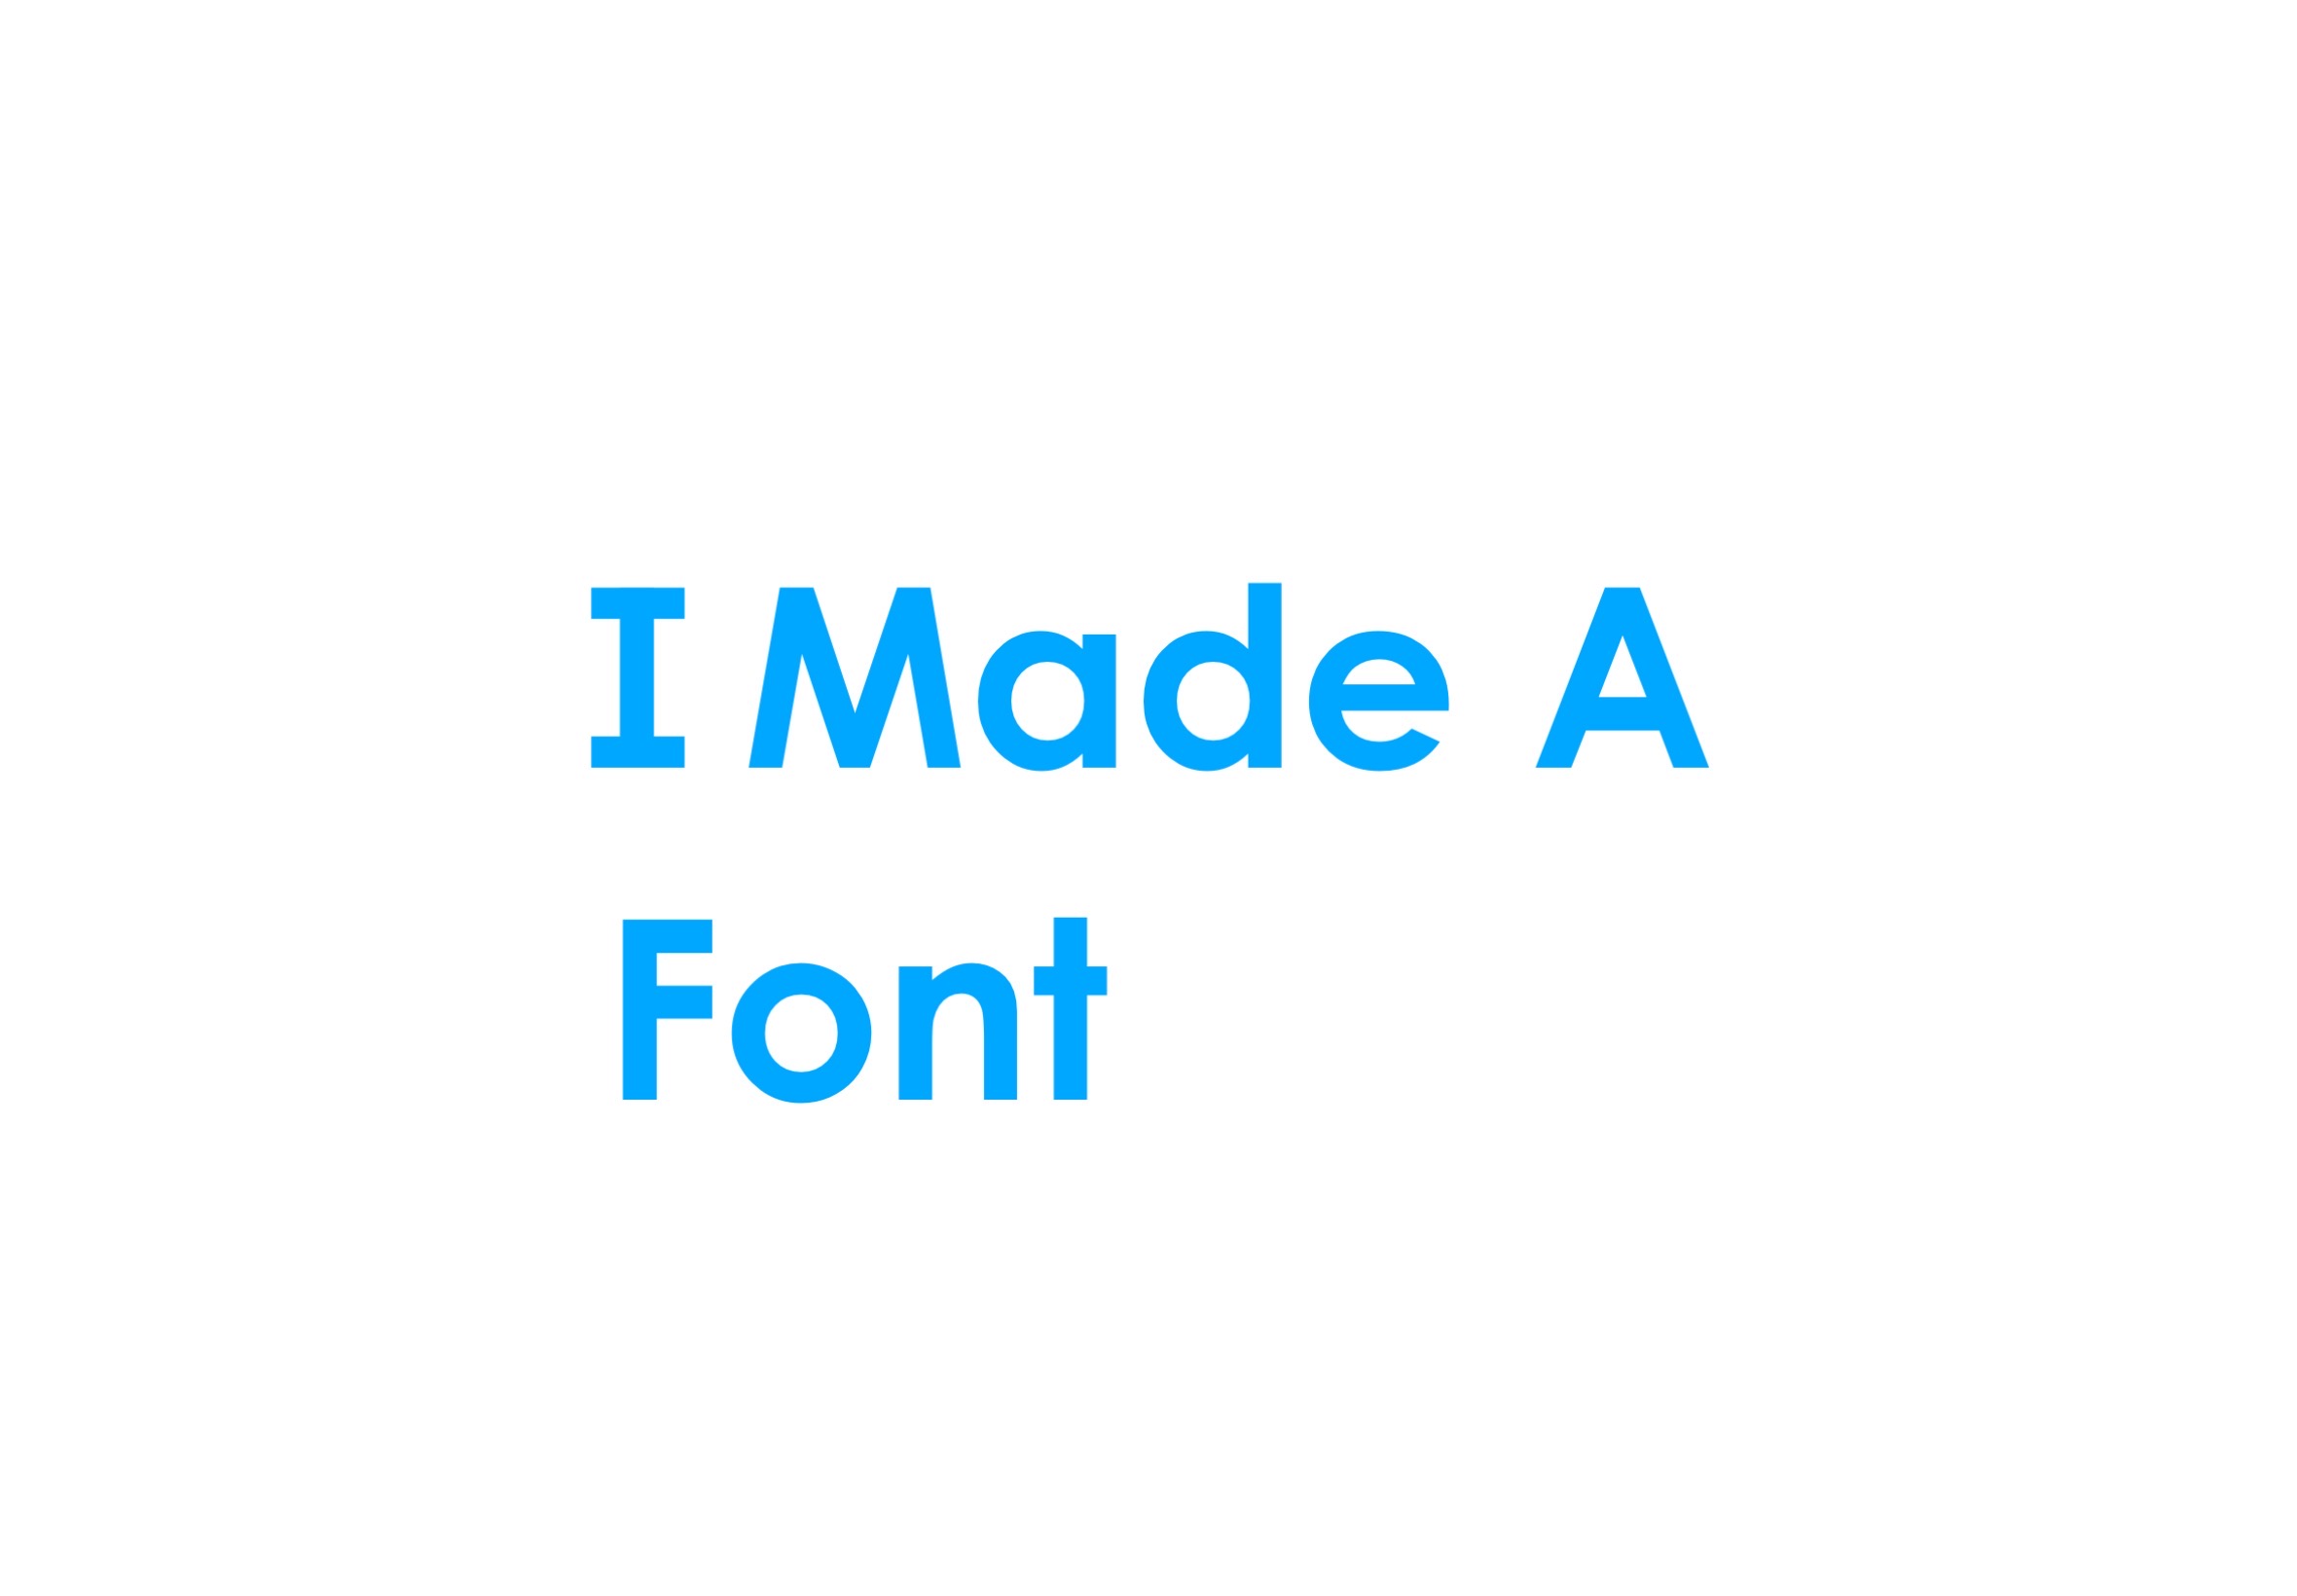 Fonts effect maker online by xggs on DeviantArt